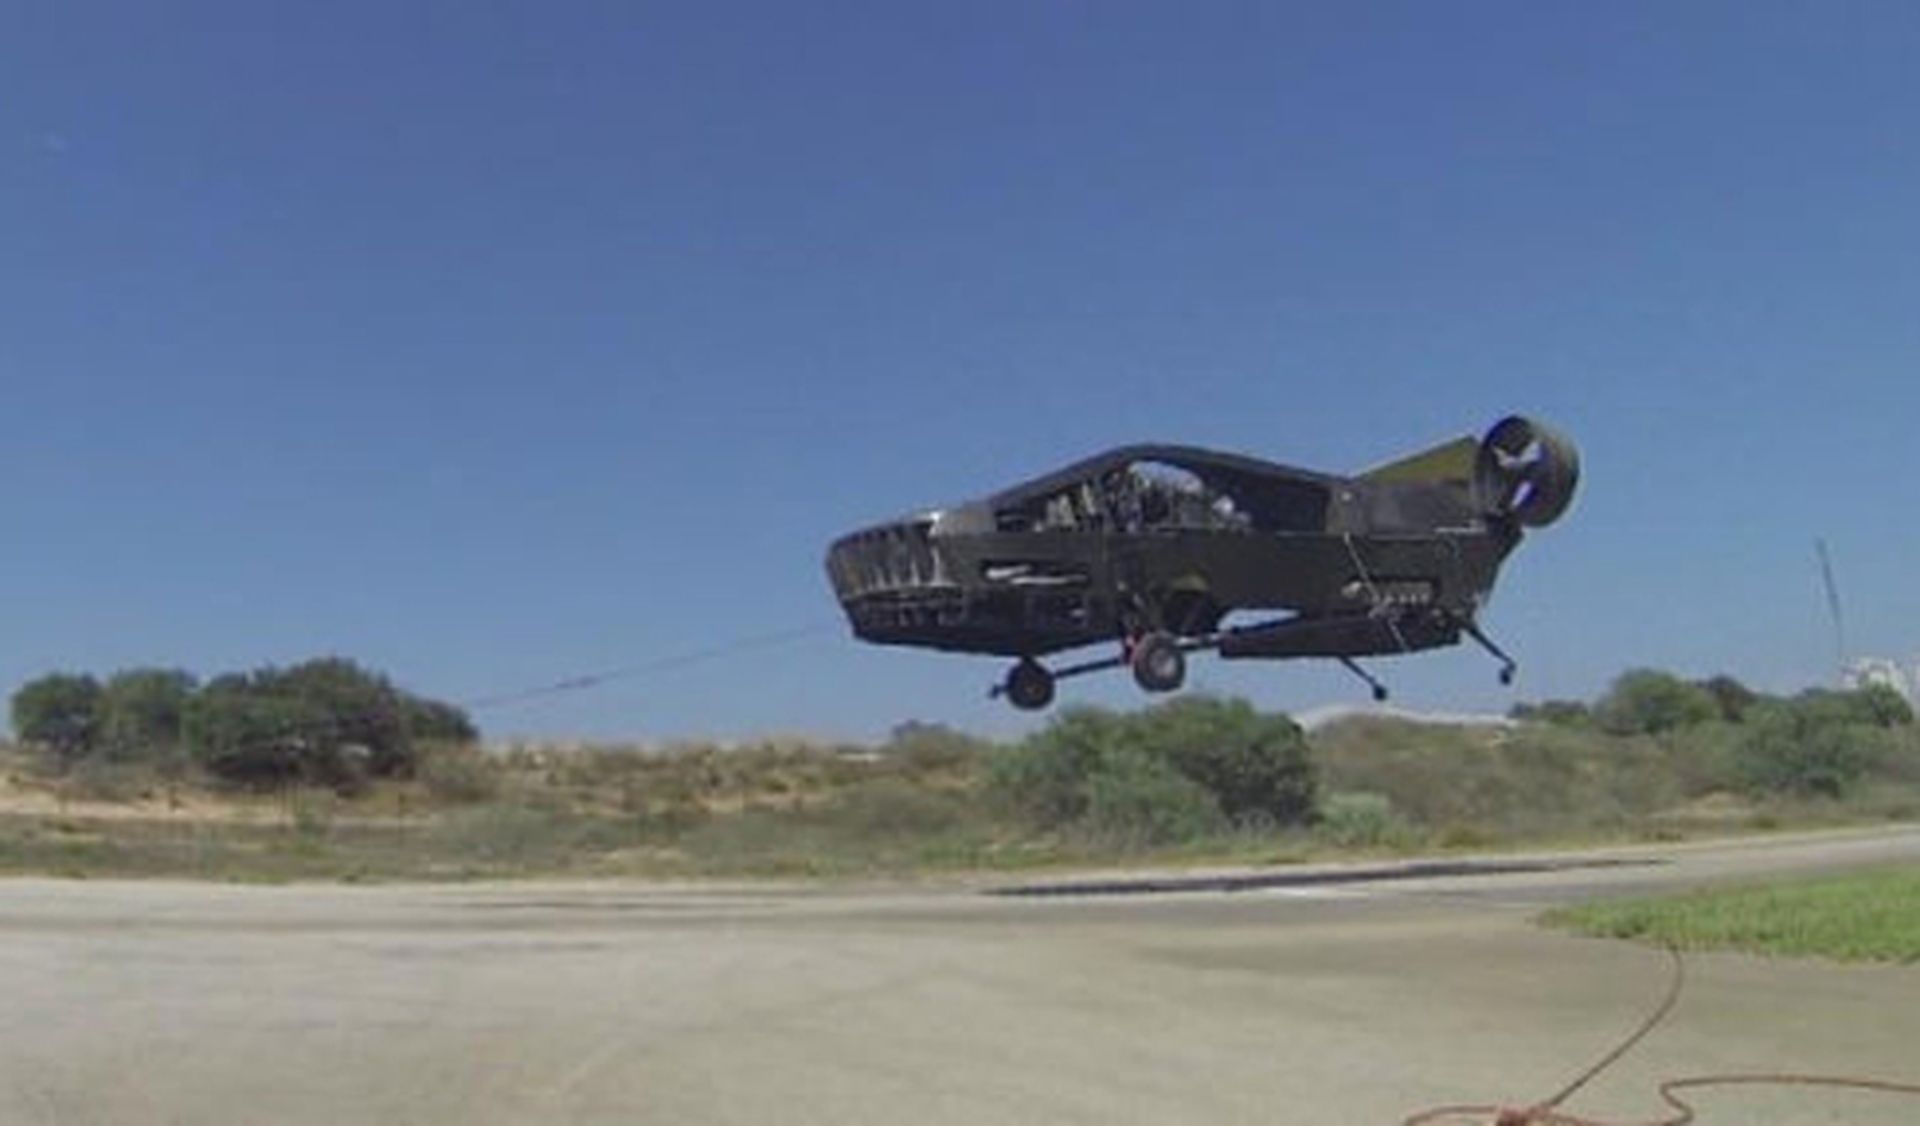 airmule avion no tripulado batman